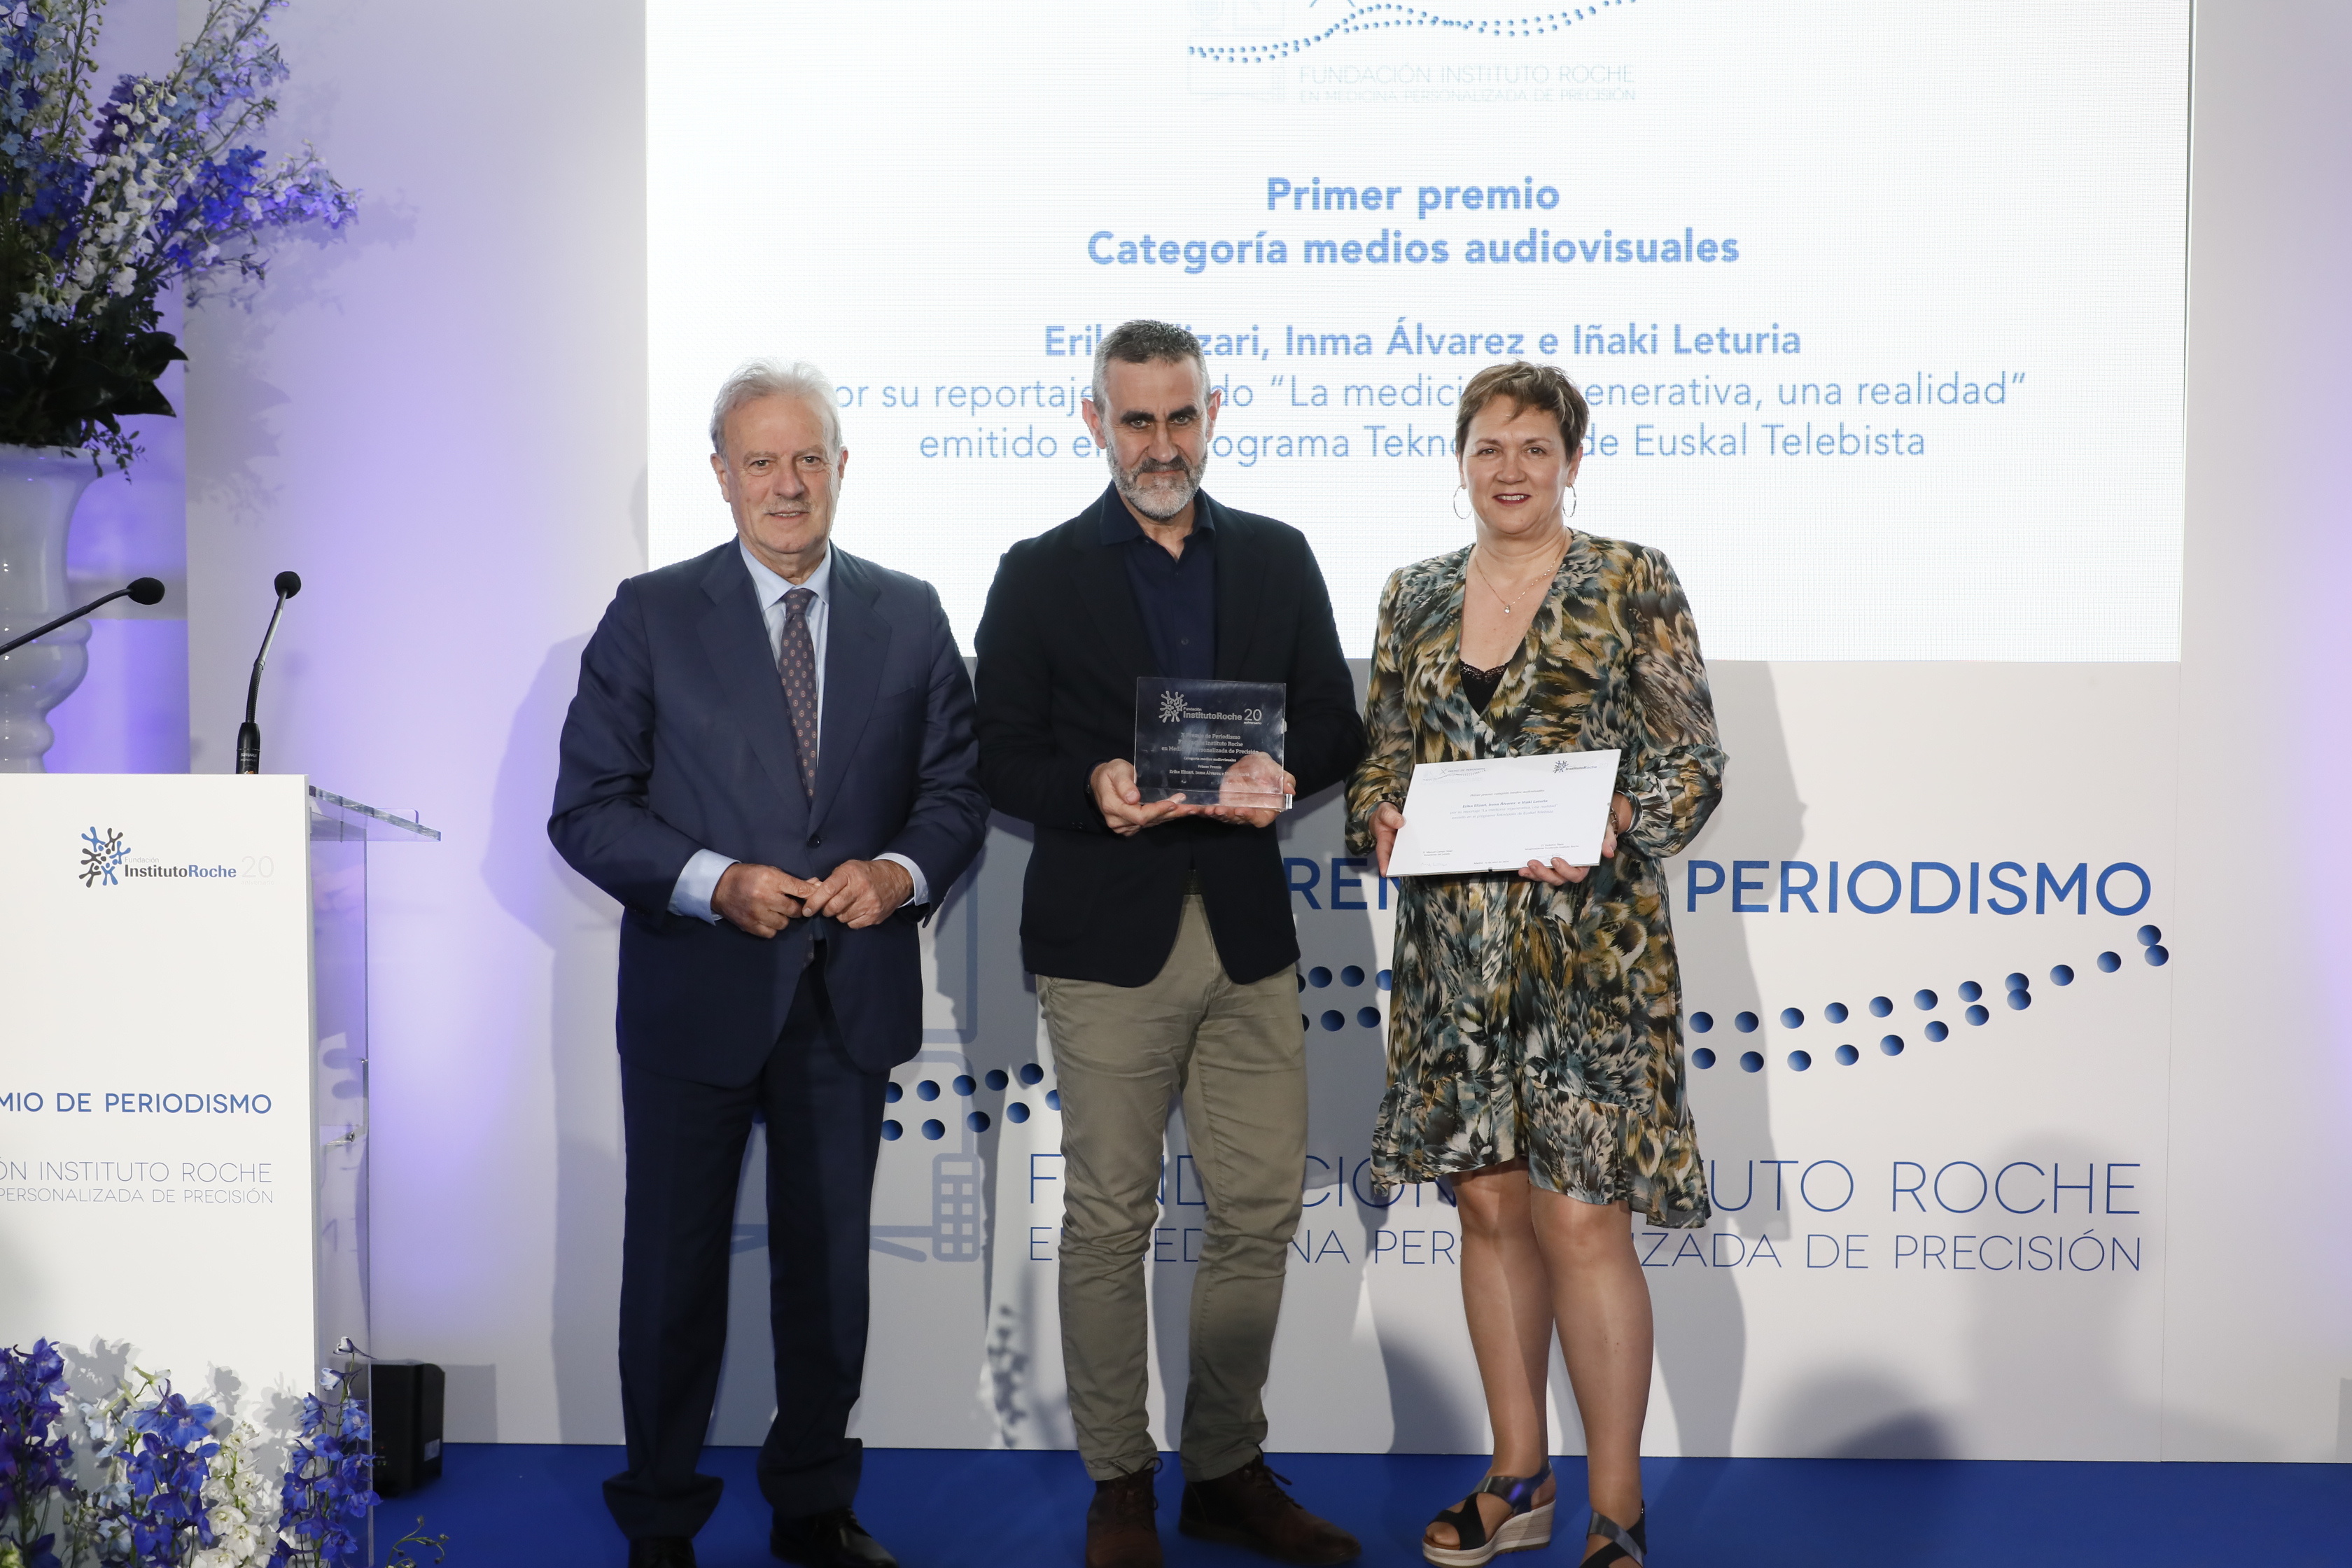 Manuel Campo Vidal Presidente del Jurado, junto con Inma Alvarez e Inaki Leturia ganadores del Primer Premio categoria audiovisual